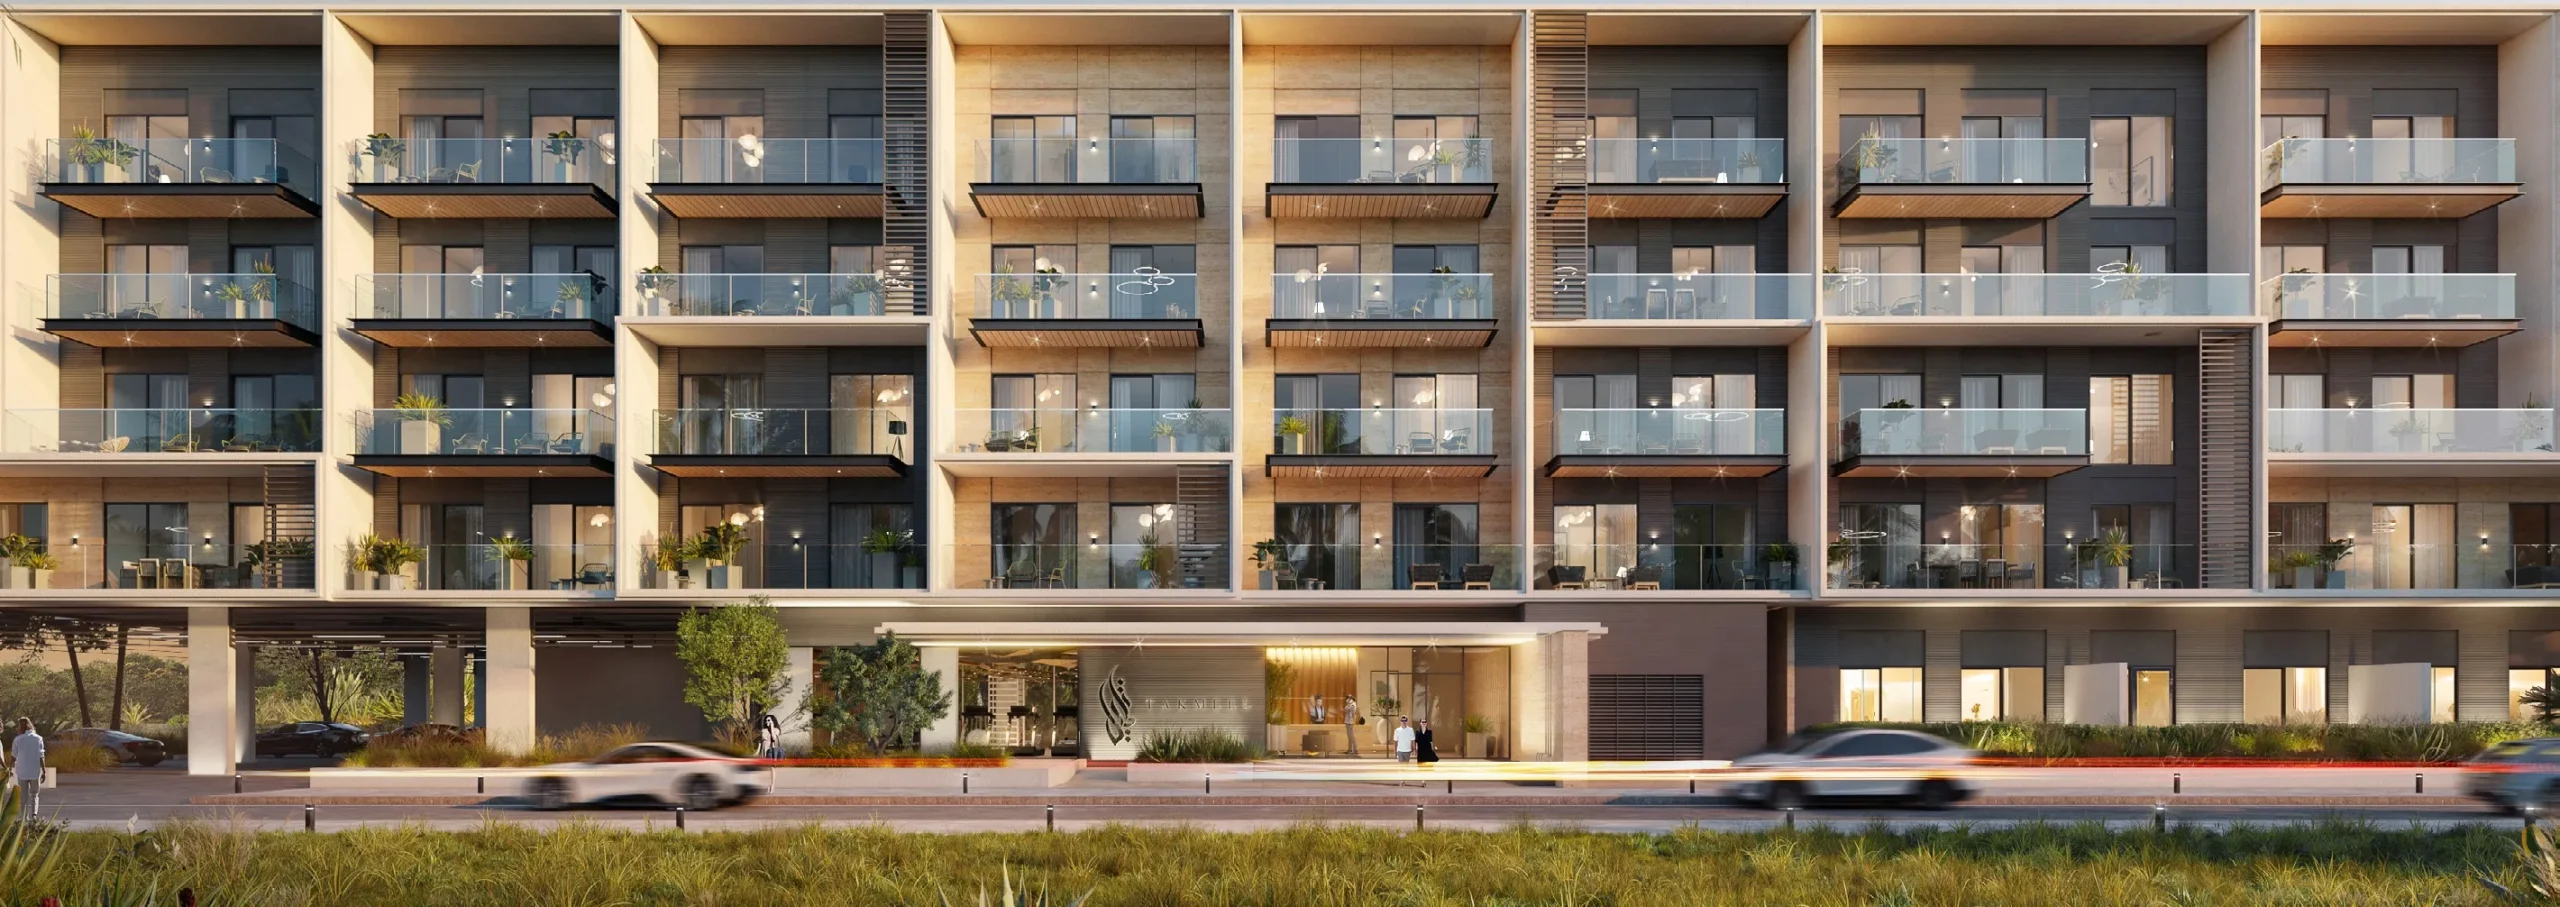 Divine Residencia at Dubai Studio City by Takmeel Properties